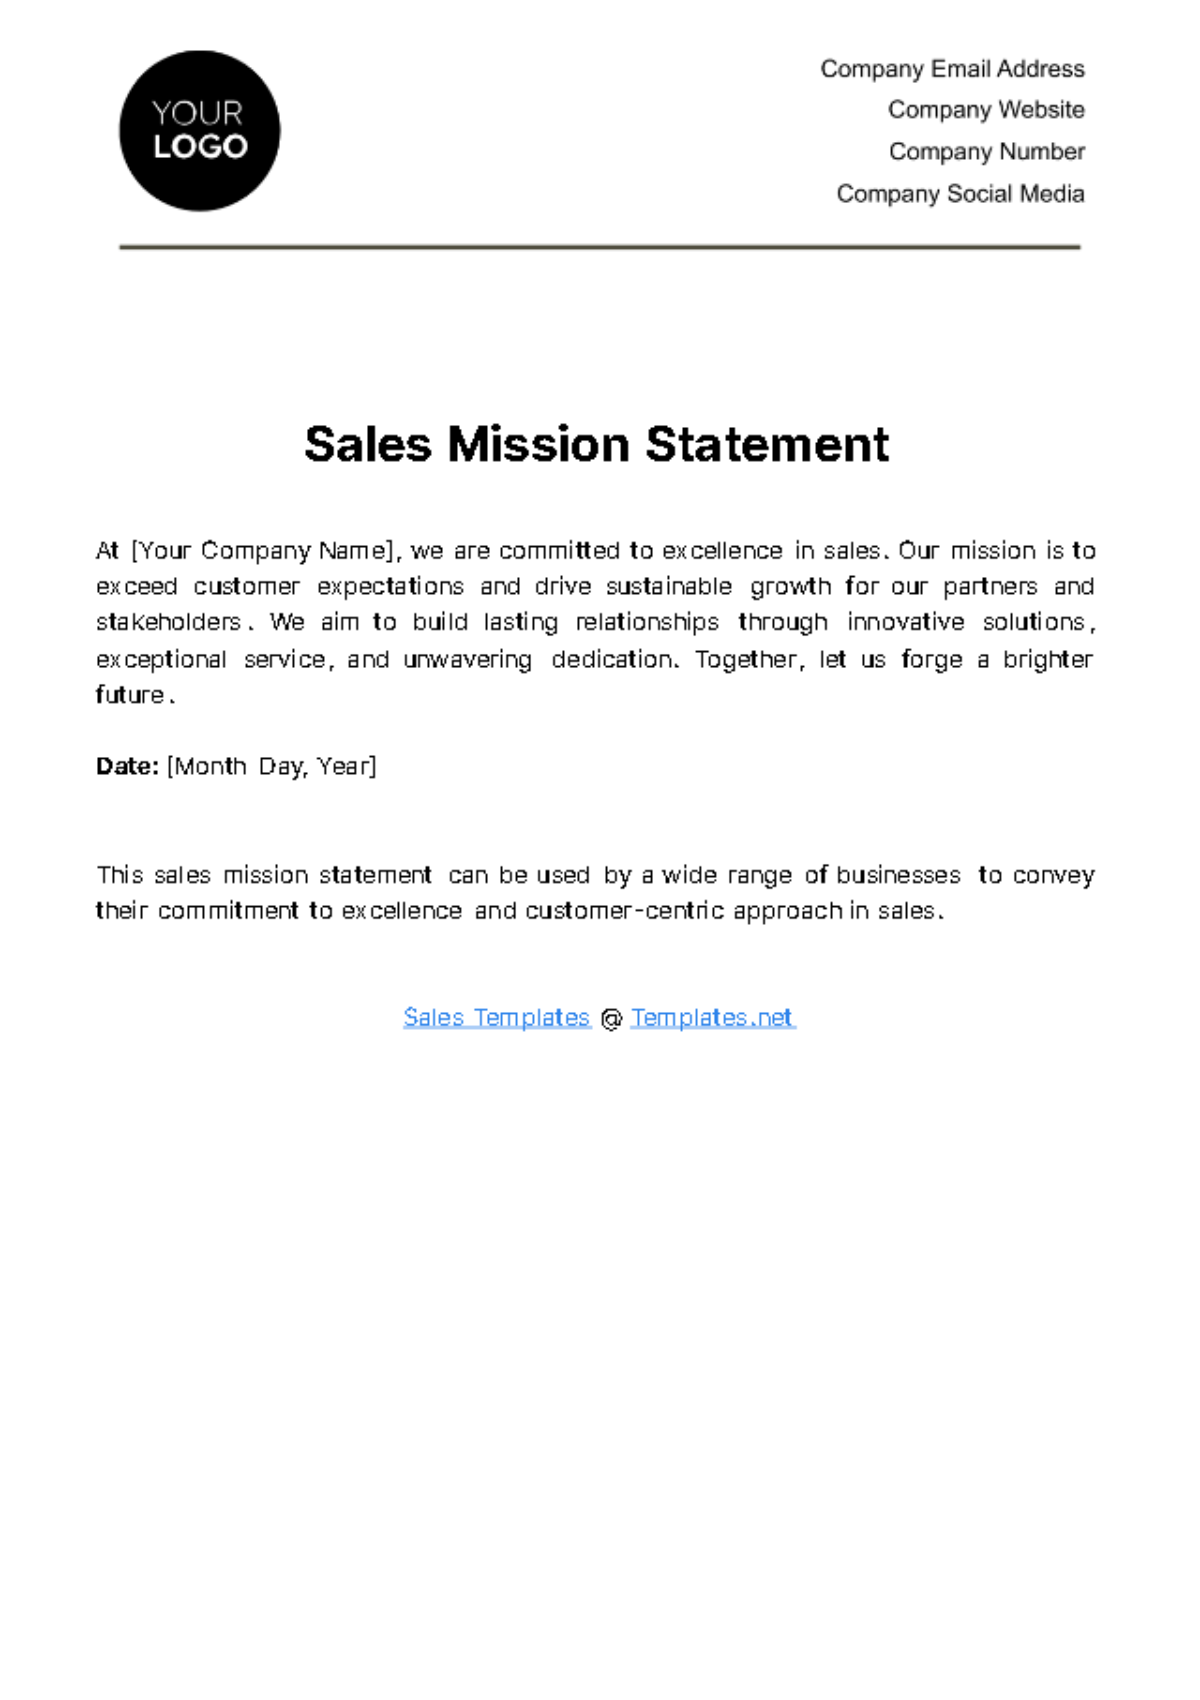 Sales Mission Statement Template